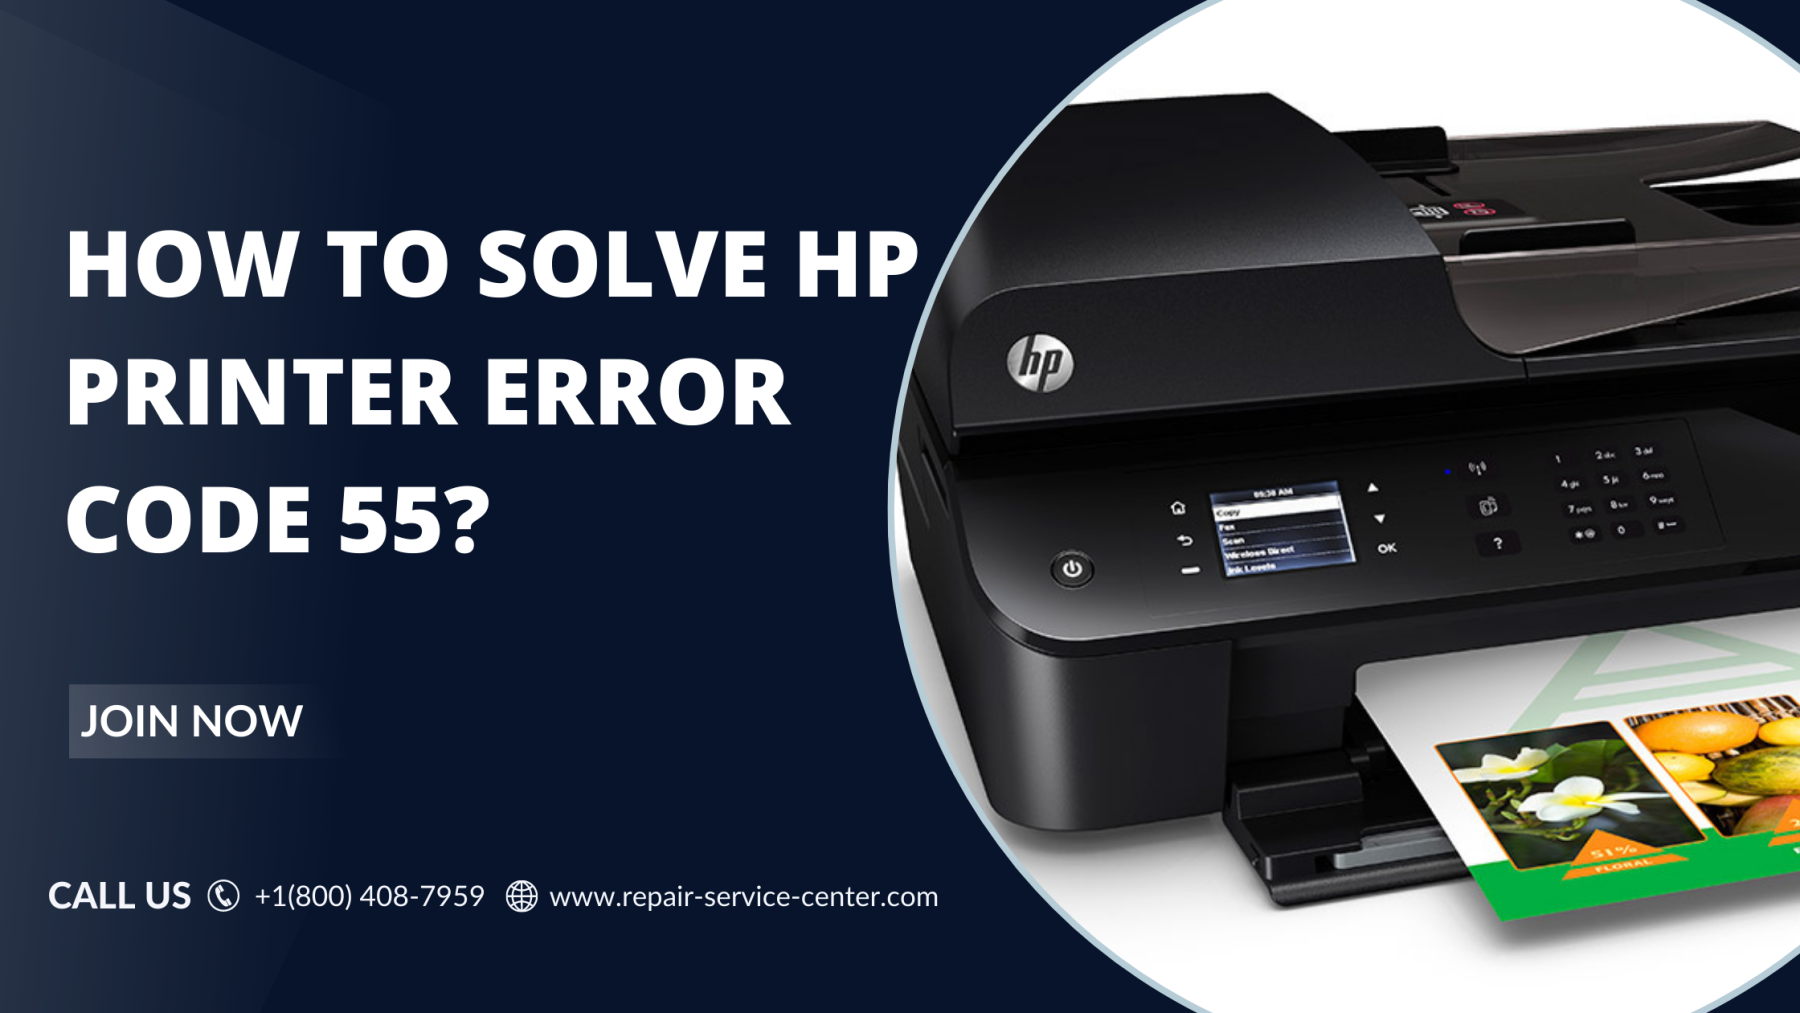 HOW TO SOLVE HP PRINTER ERROR CODE 55?